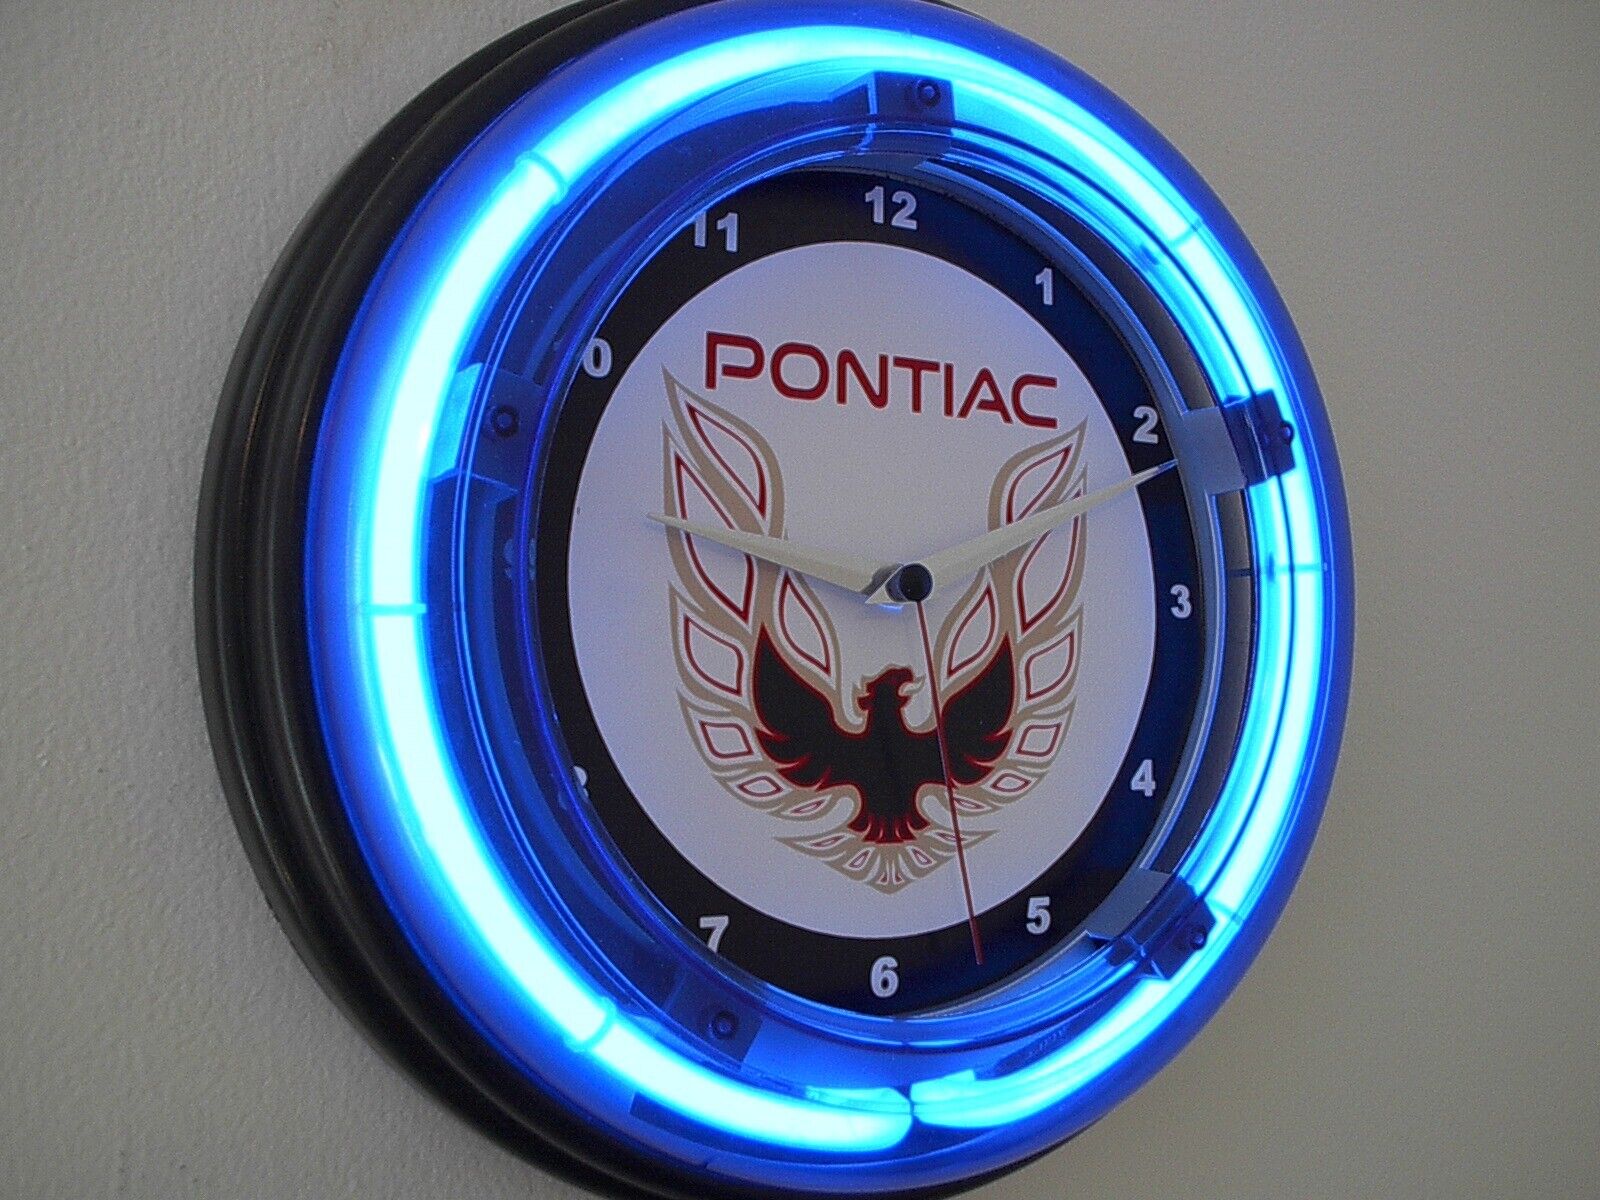 Pontiac Fire Bird Tran Am Motors Auto Garage Neon Wall Clock Advertising Sign